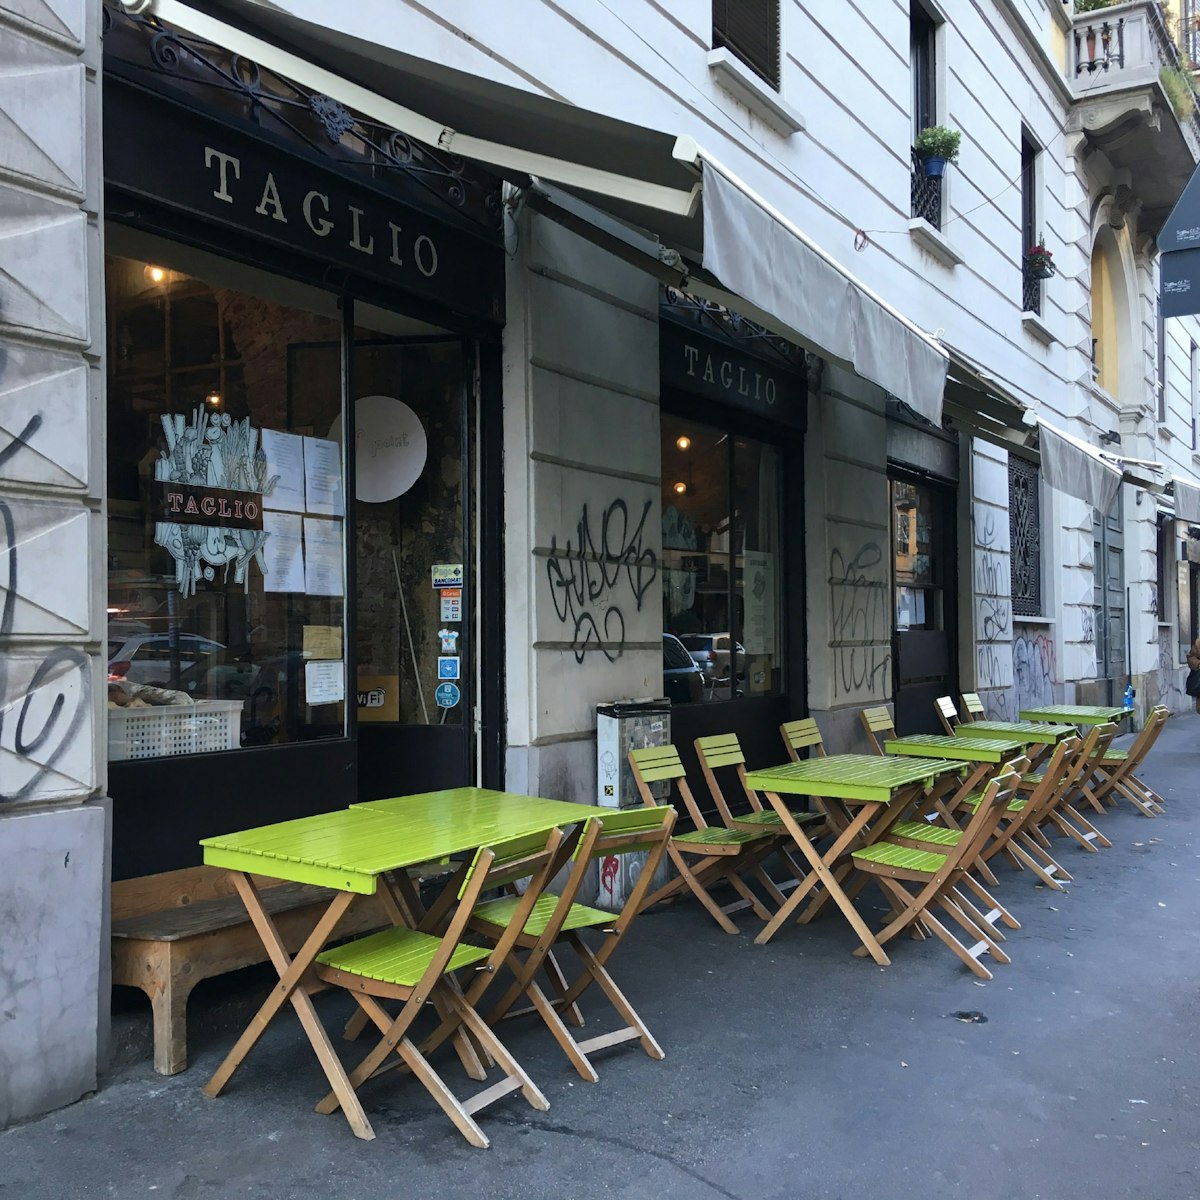 Street view of Taglio